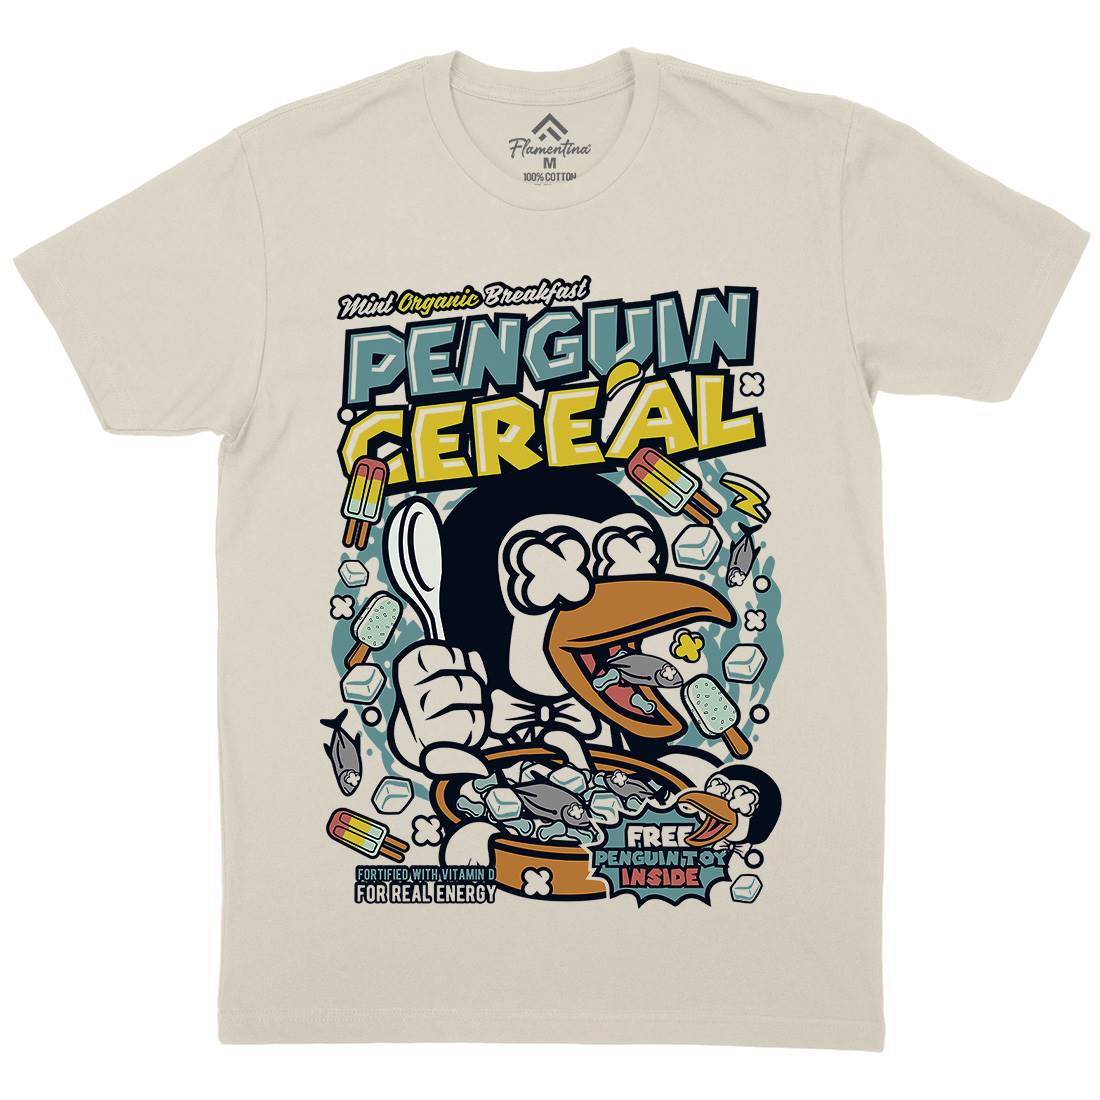 Penguin Cereal Box Mens Organic Crew Neck T-Shirt Food C602